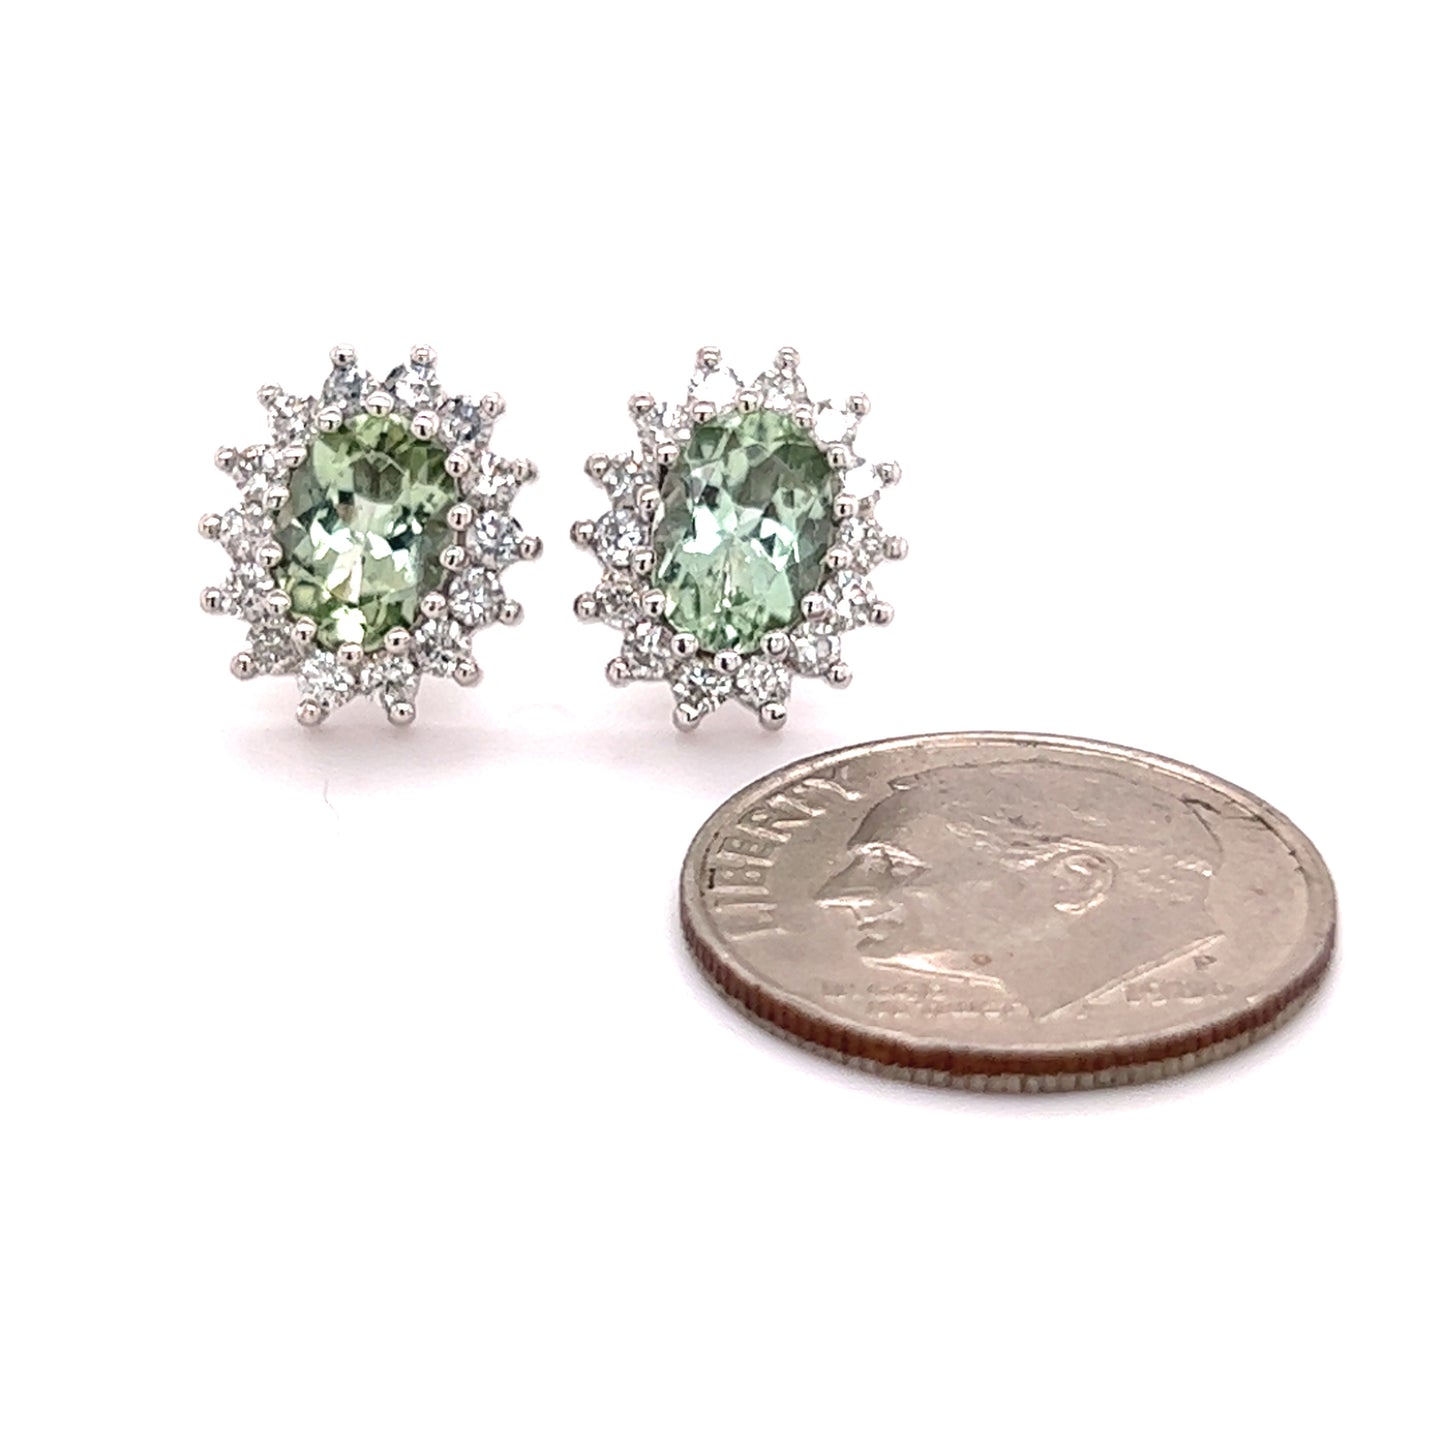 Natural Tourmaline Diamond Stud Earrings 14k W Gold 2.42 TCW Certified $3,950 215090